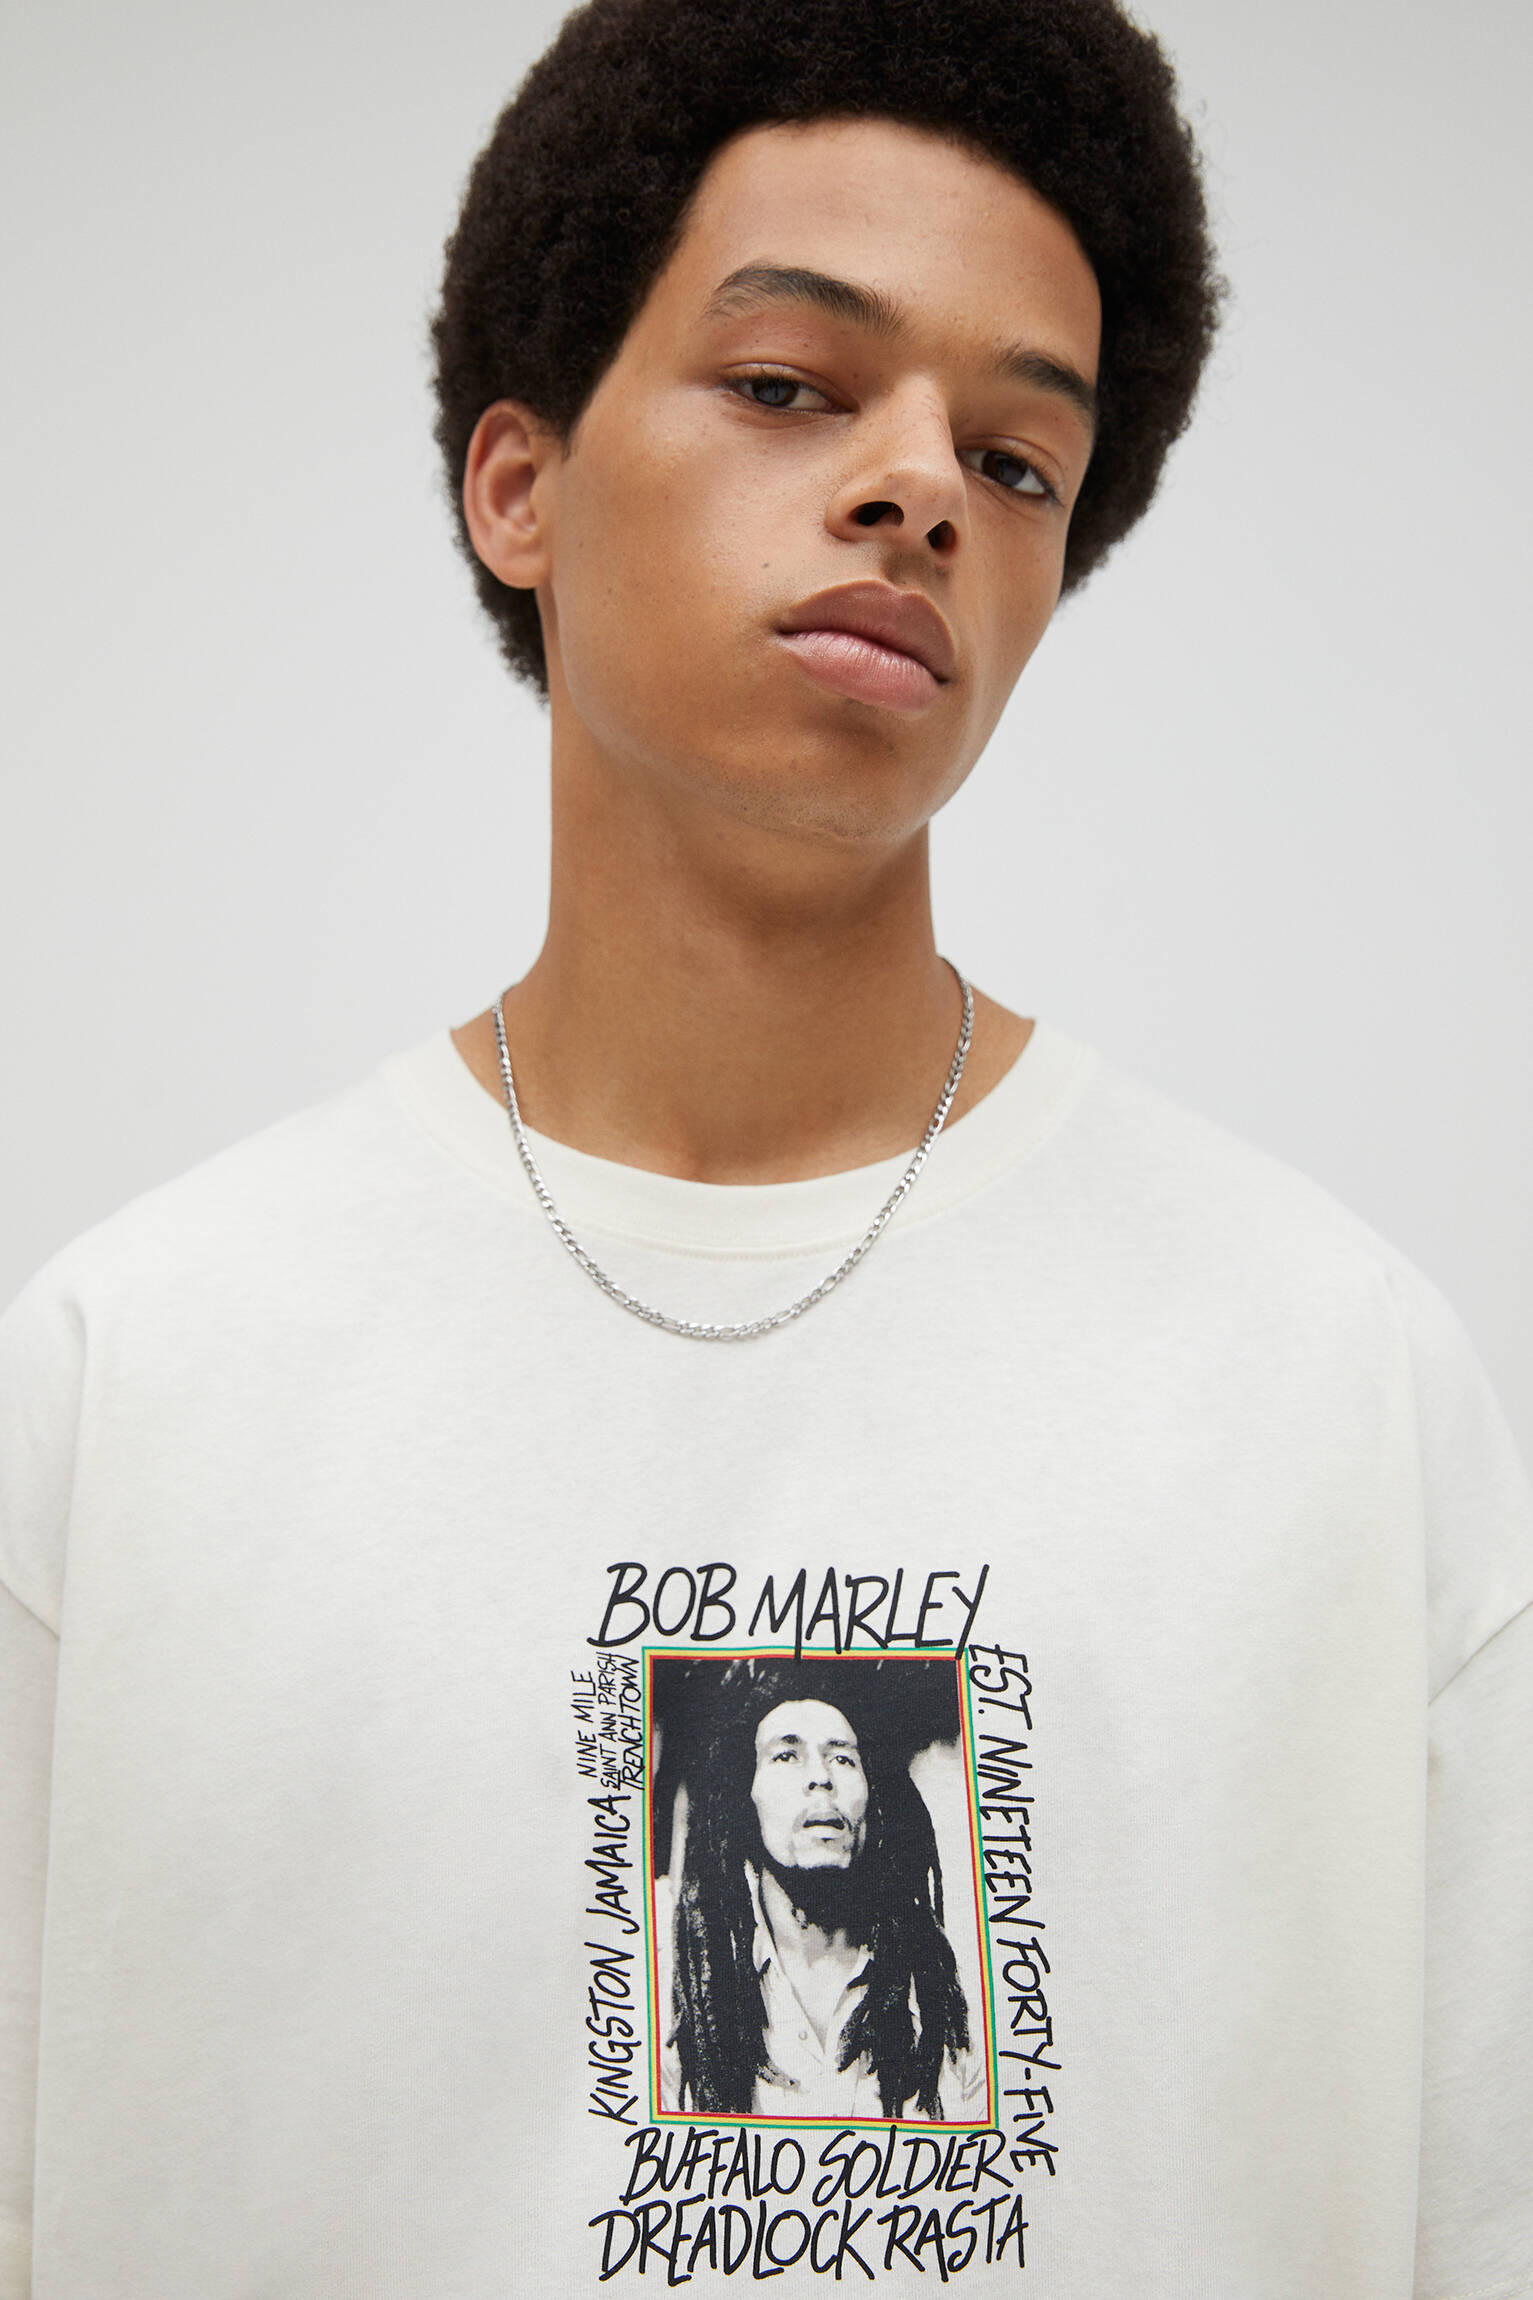 Pull & Bear - Bob Marley “Buffalo Soldier” T-shirt